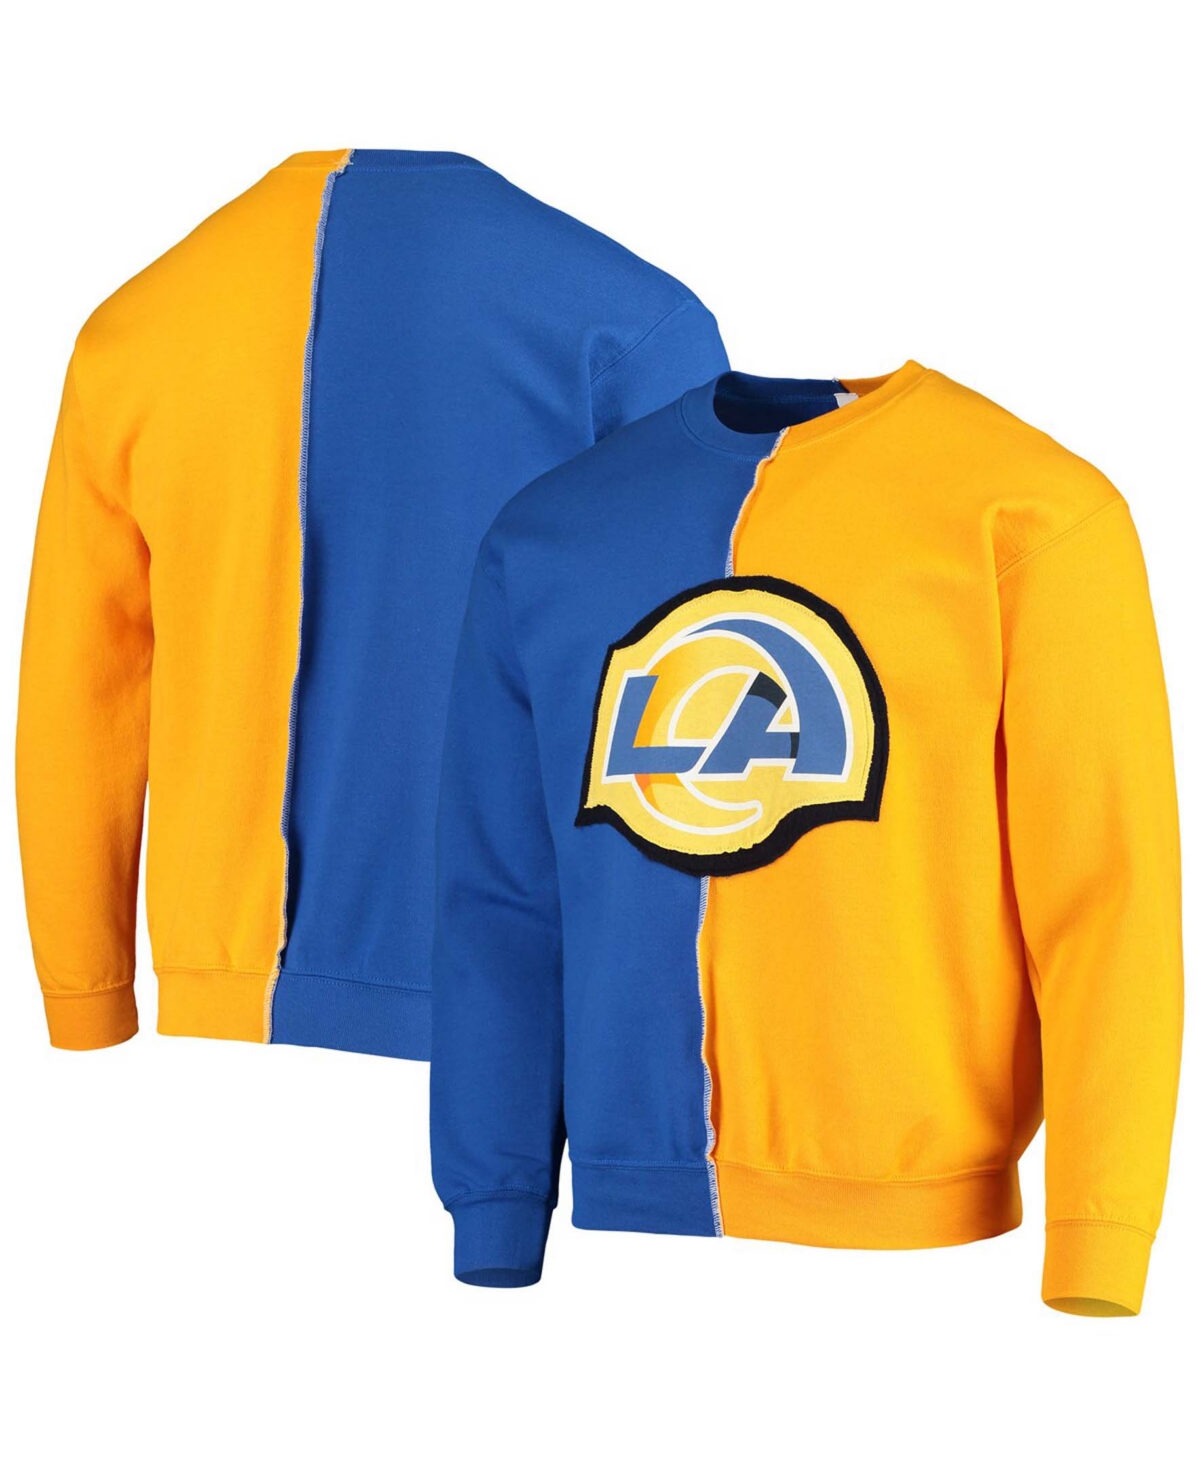 Men's Royal, Gold-Tone Los Angeles Rams Split Center Pullover Sweatshirt - Royal Blue, Gold-Tone